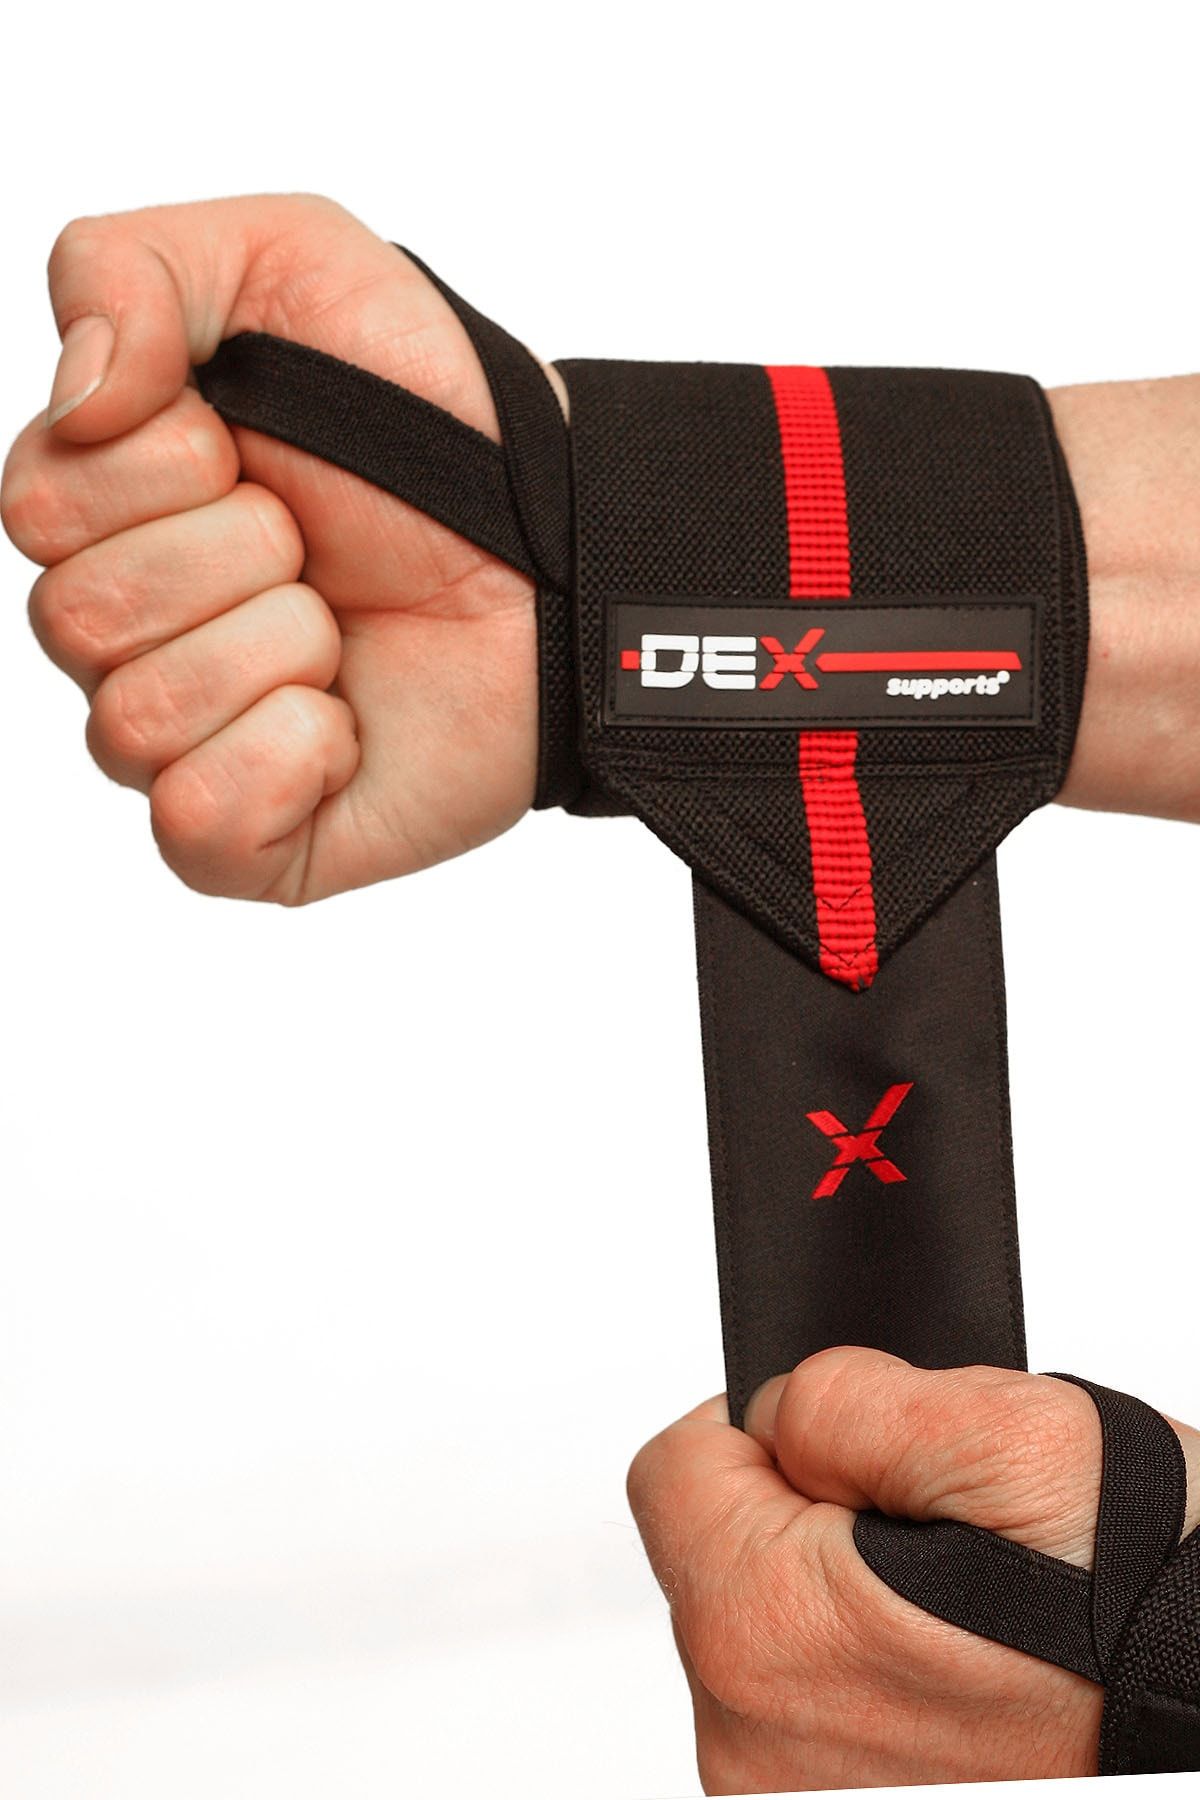 Dex Supports Fitness Bilek Sargısı , Elite Wrıst Wraps 2'li Paket